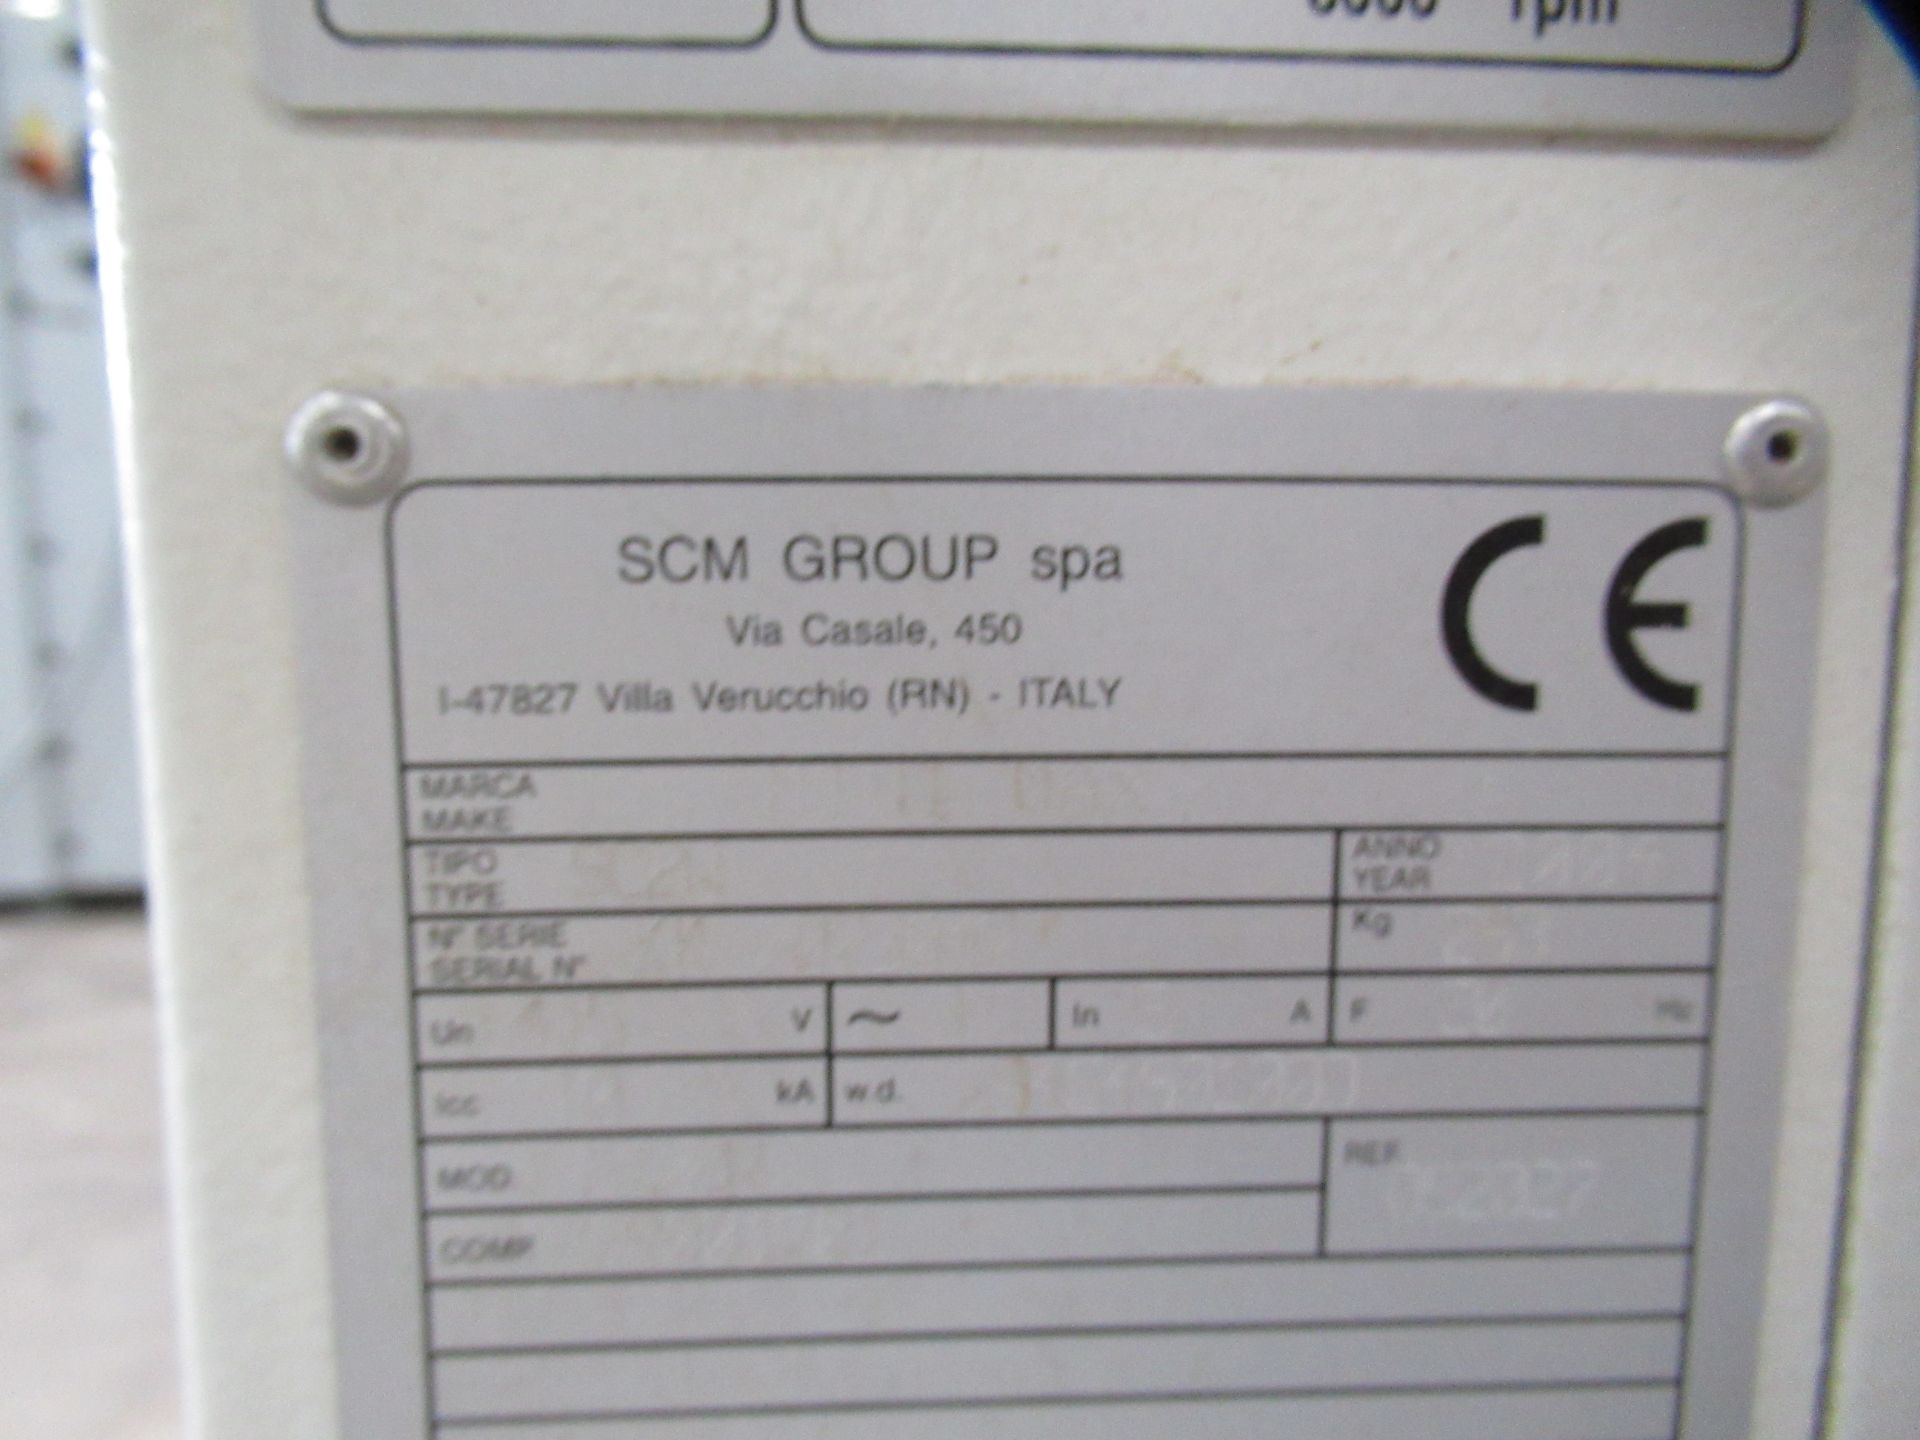 SCM Minimax SC2 W Sliding Table Panel Saw - 3ph - Image 5 of 6